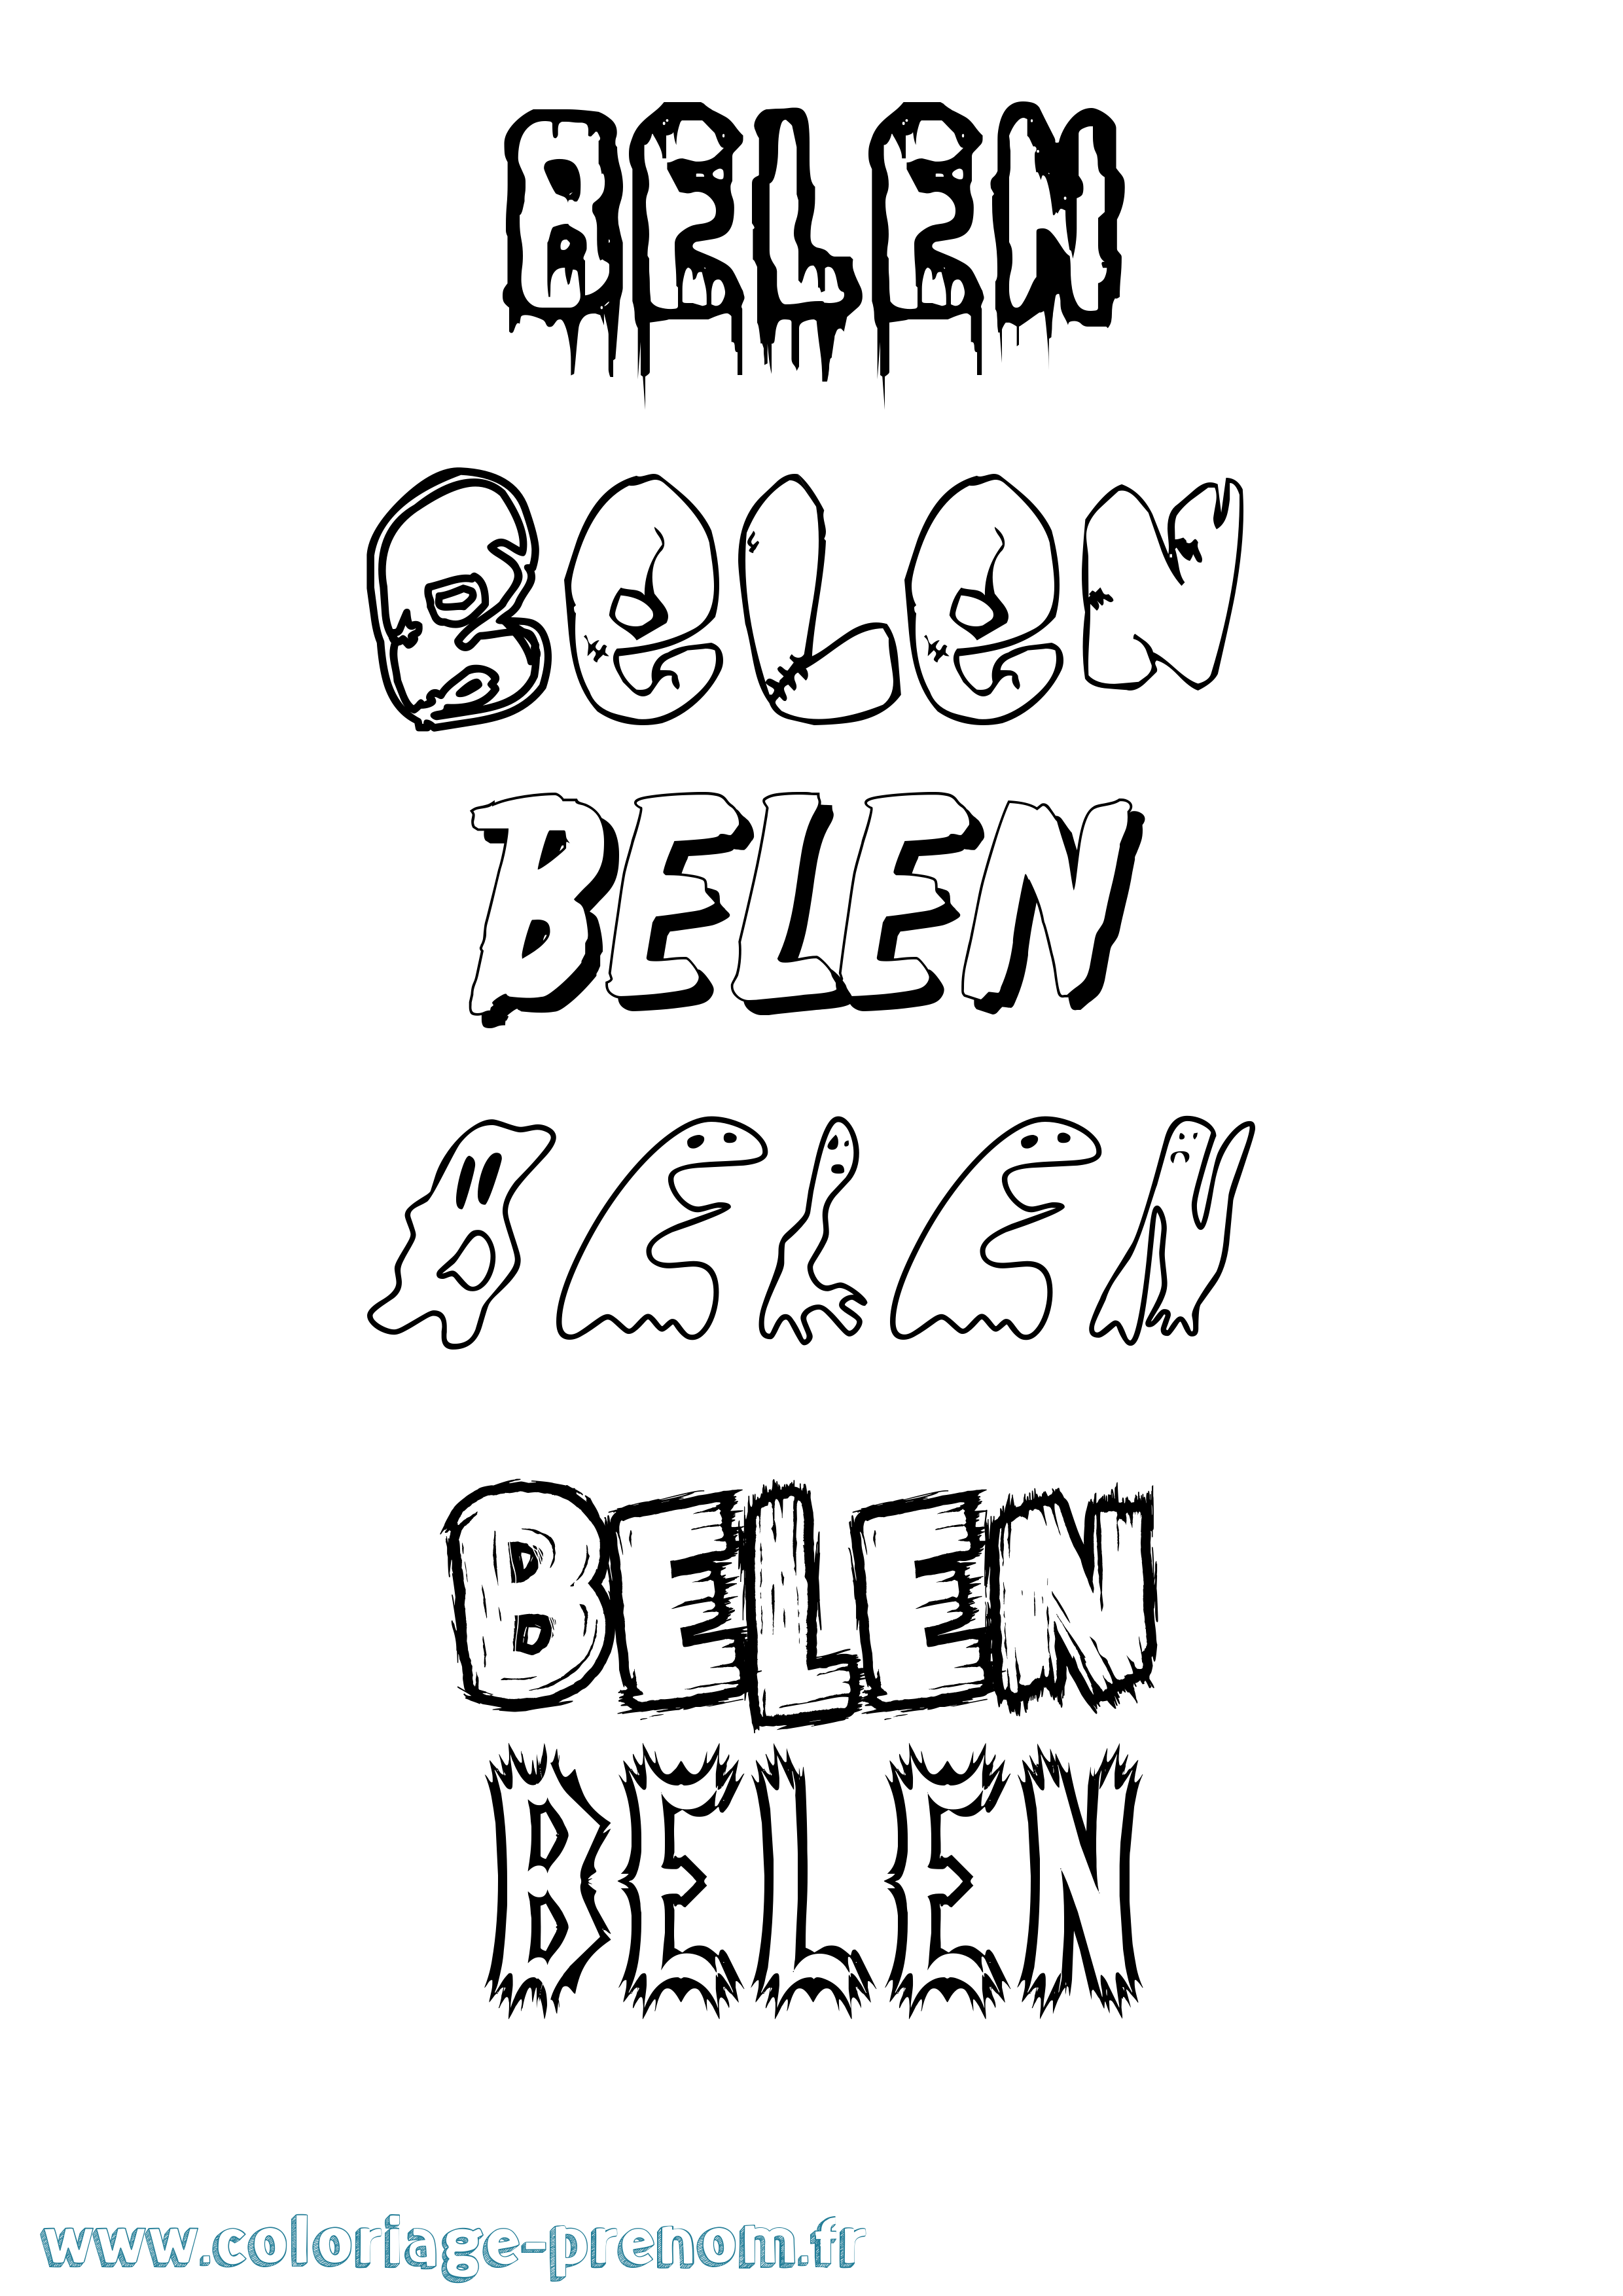 Coloriage prénom Belen Frisson